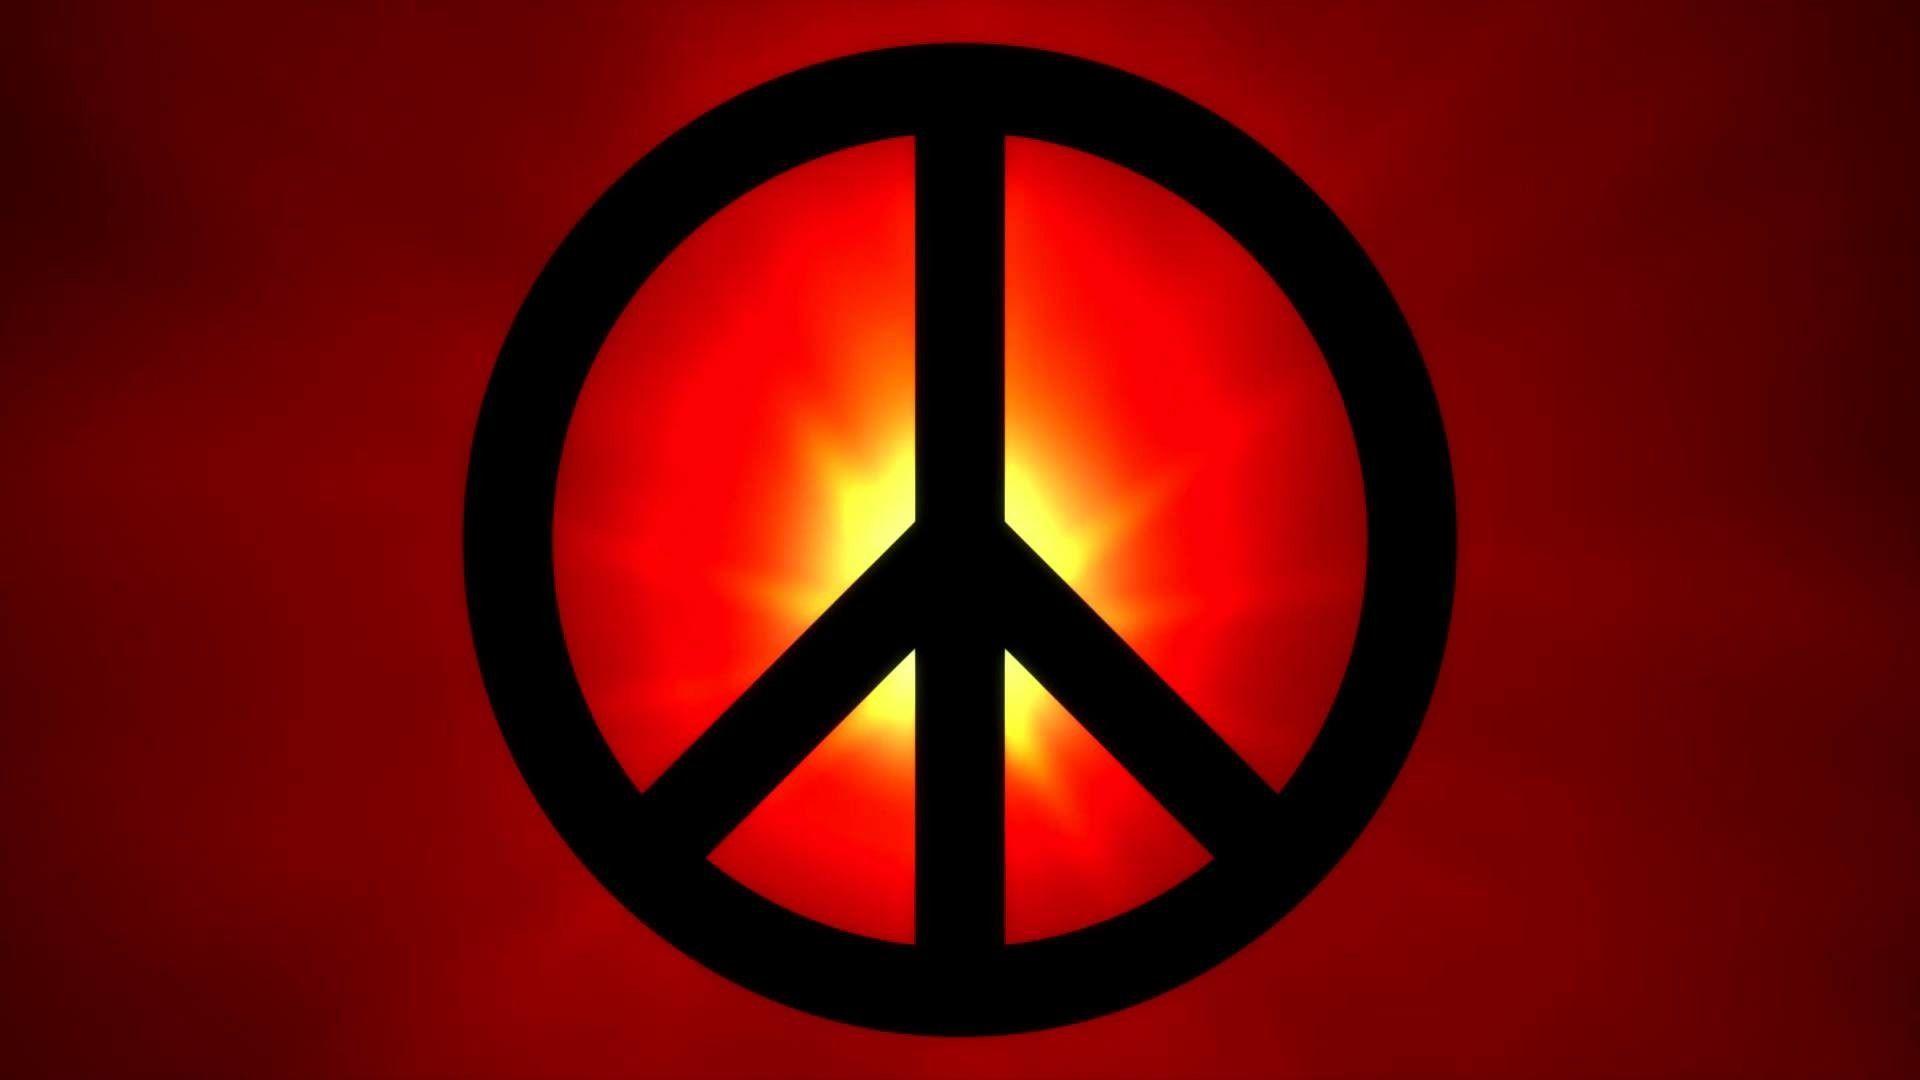 Peace Symbol Wallpaper (Picture)